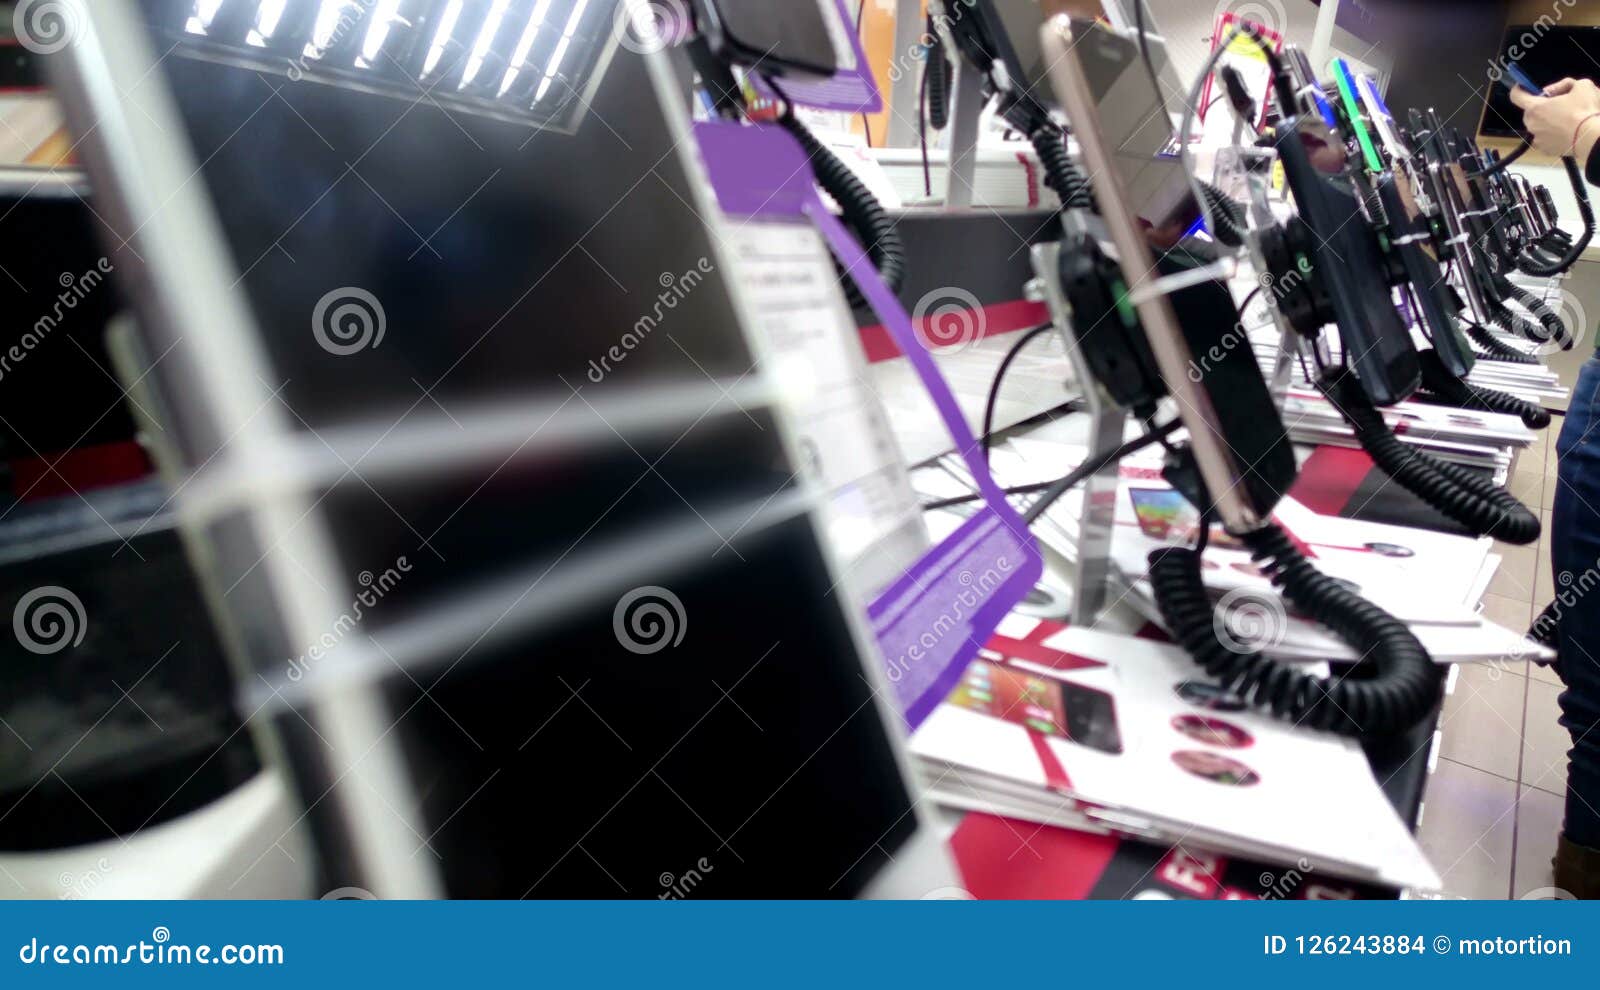 gadget showroom at electronics store, buyers testing and choosing smartphones